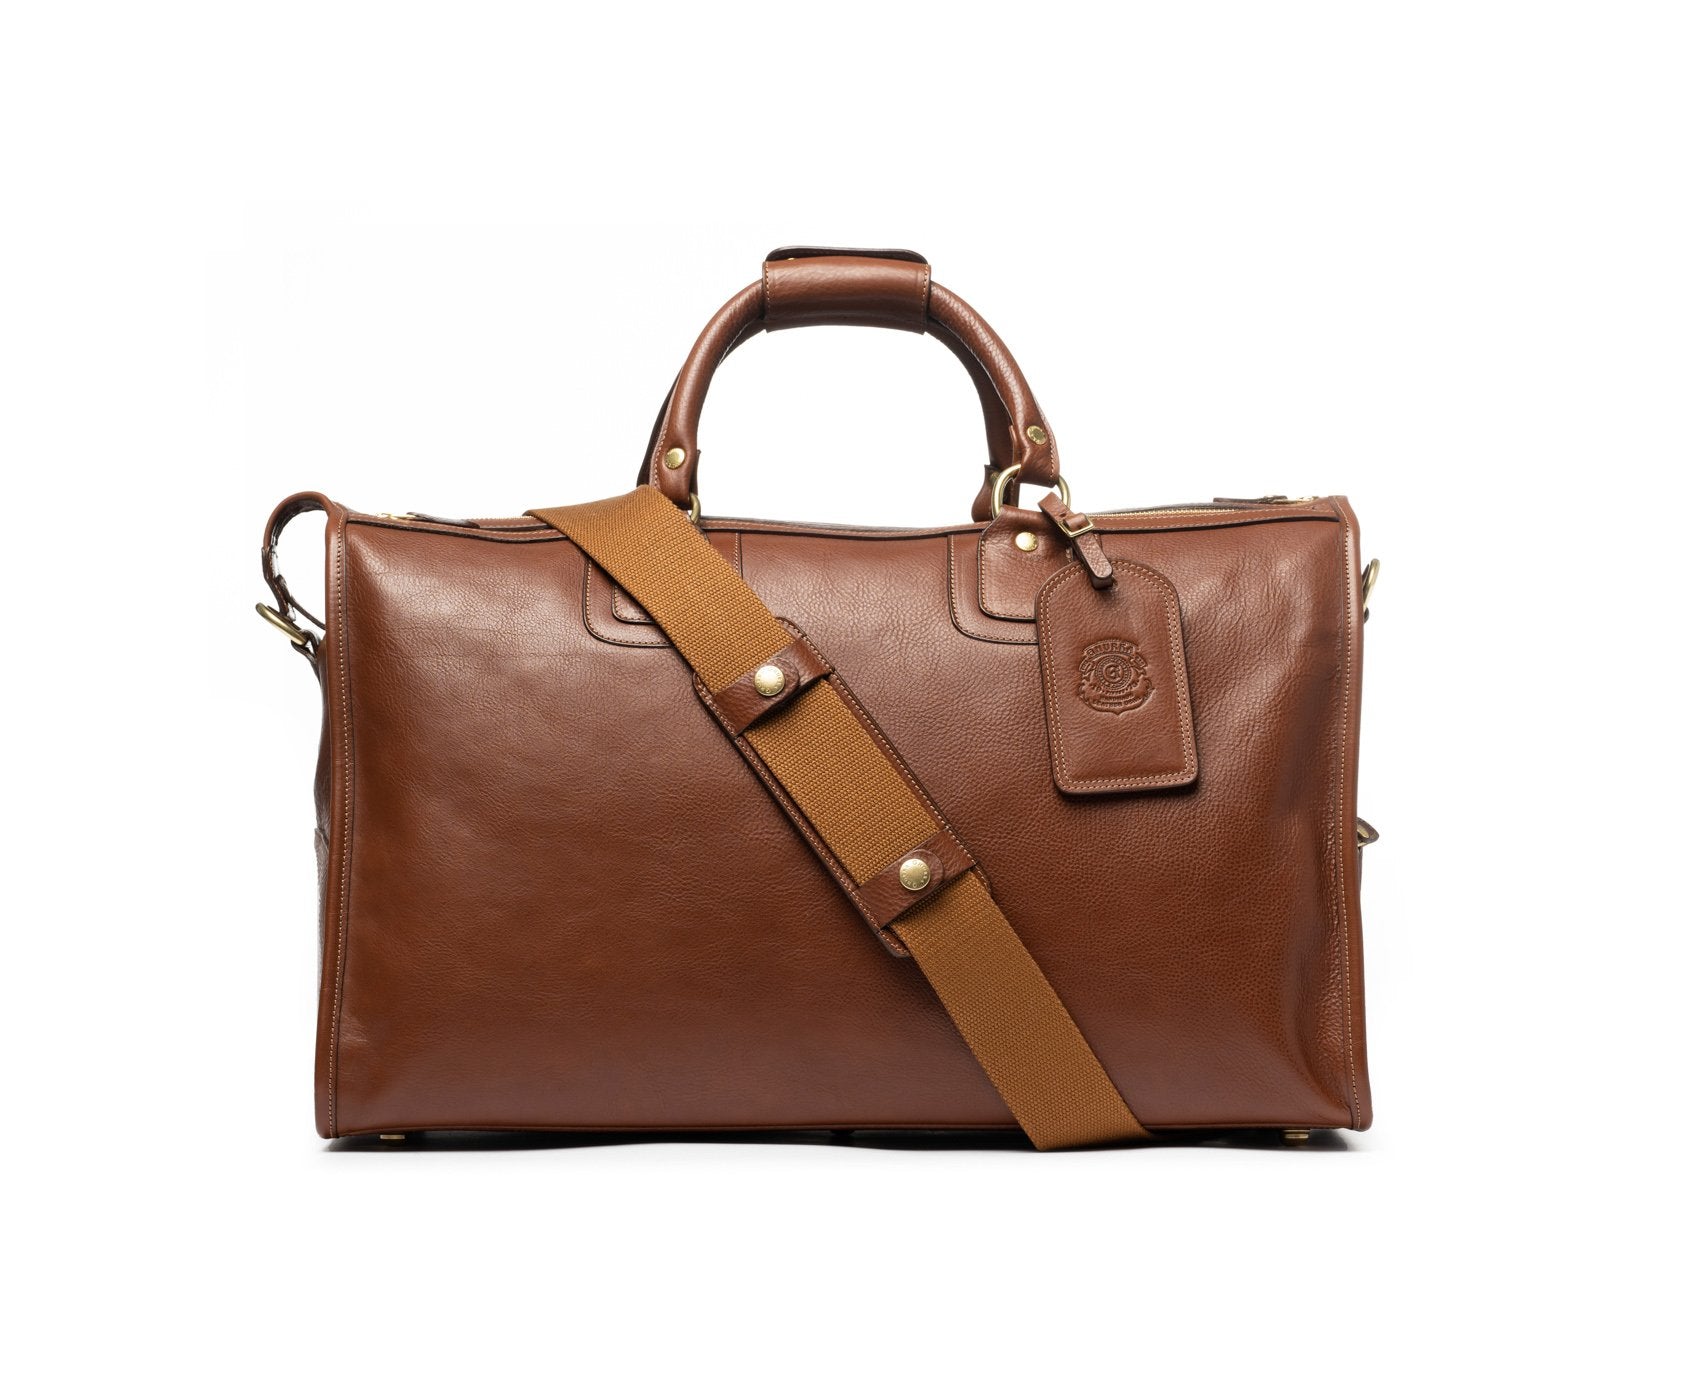 Express No. 2 Duffel Bag in Vintage Leather Chestnut